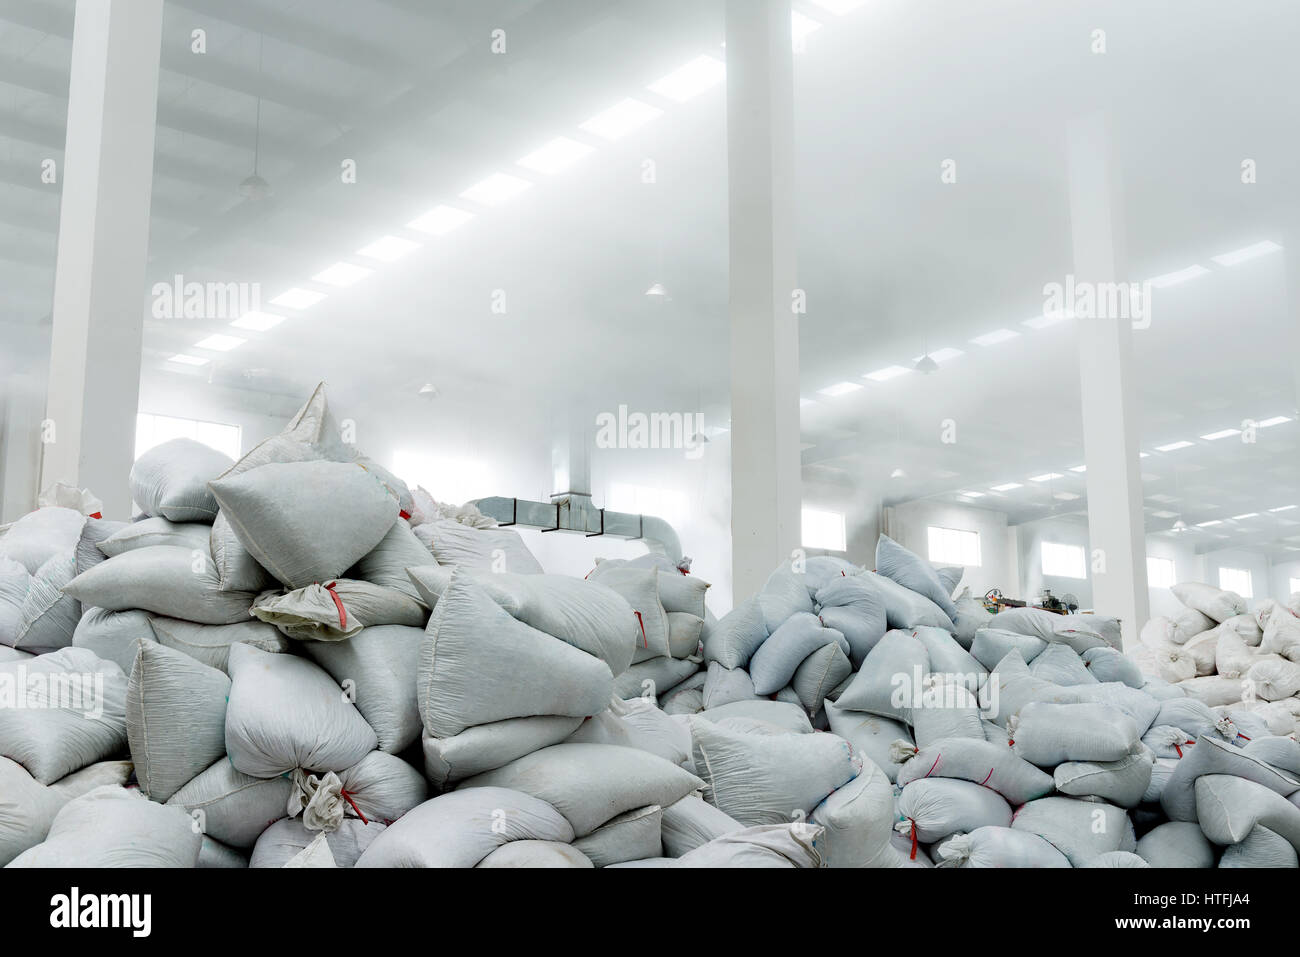 Un grand nombre de sacs dans l'entrepôt. Banque D'Images